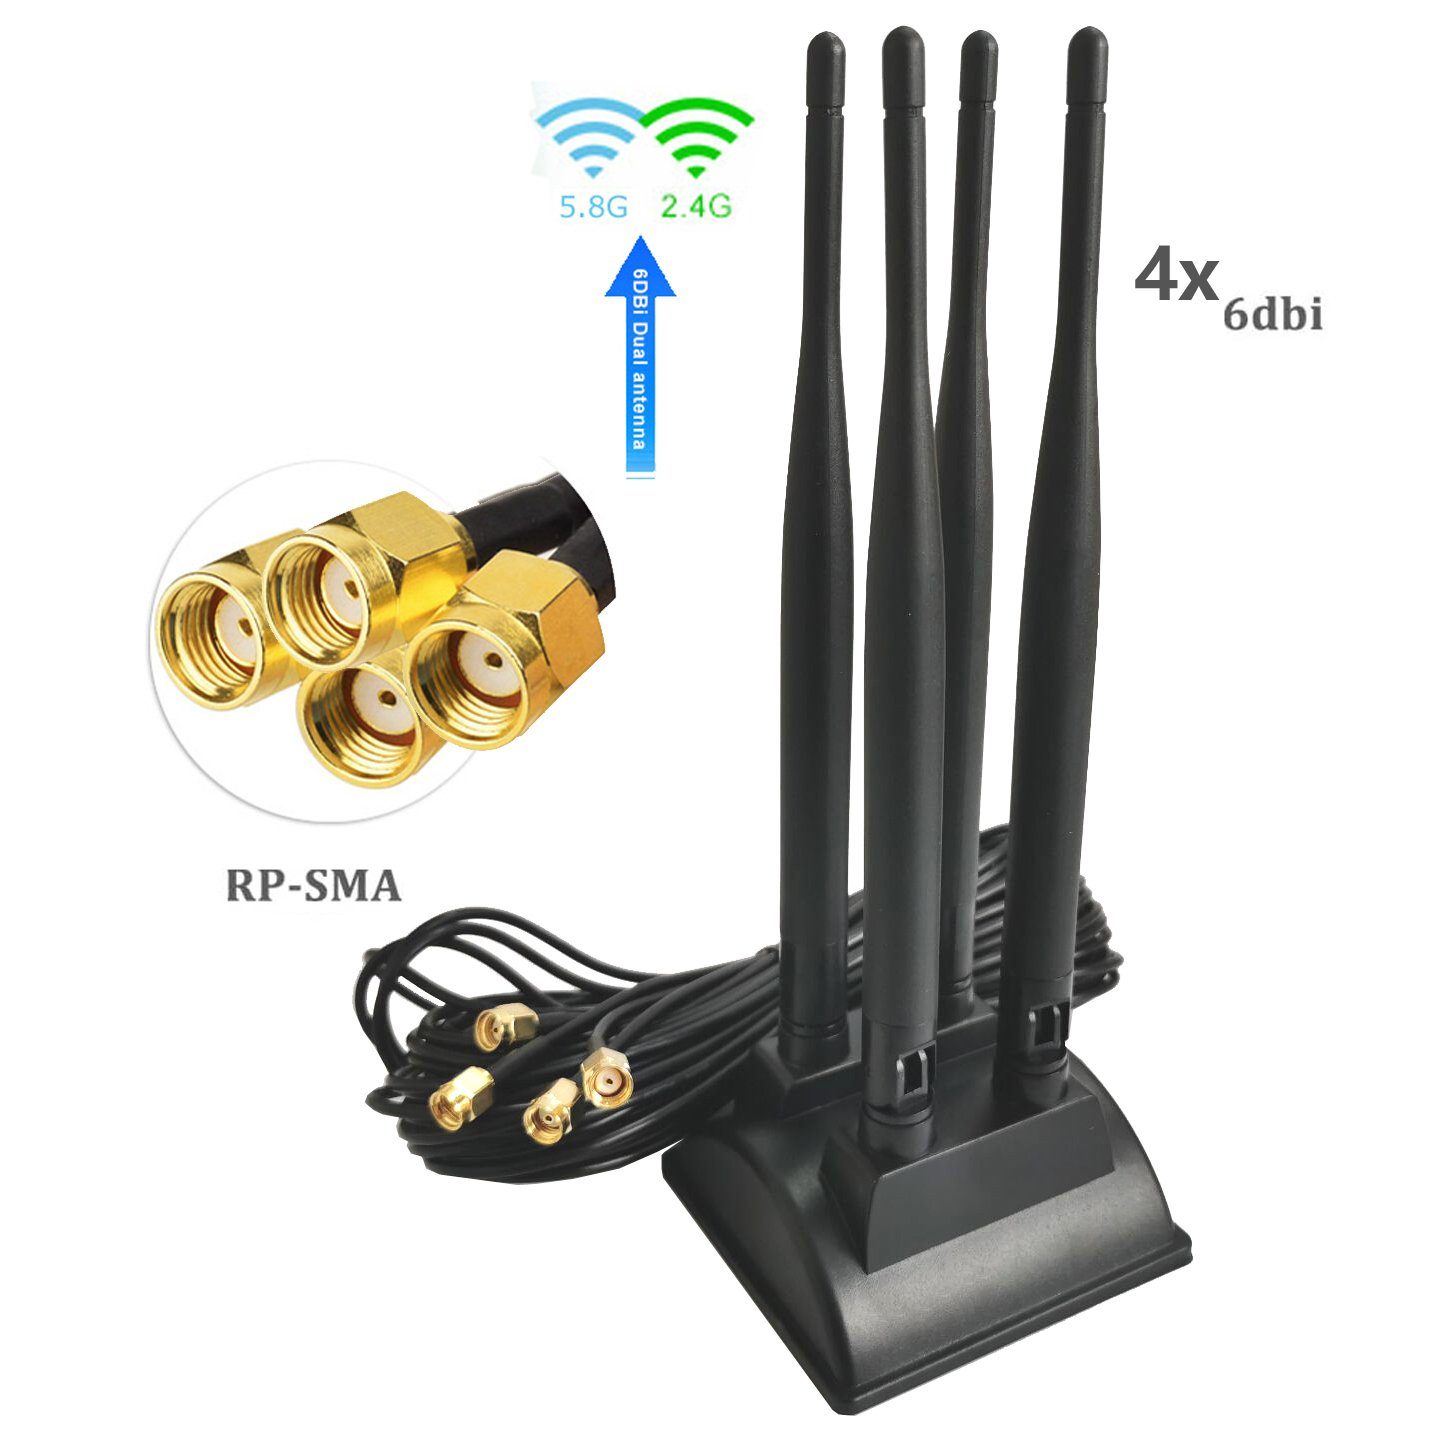 Bolwins I03D 3m 2.4G 5.8G WLAN-Antenne RP-SMA Standfuss Kabel 6dBi 4x Antenne WiFi Adapter